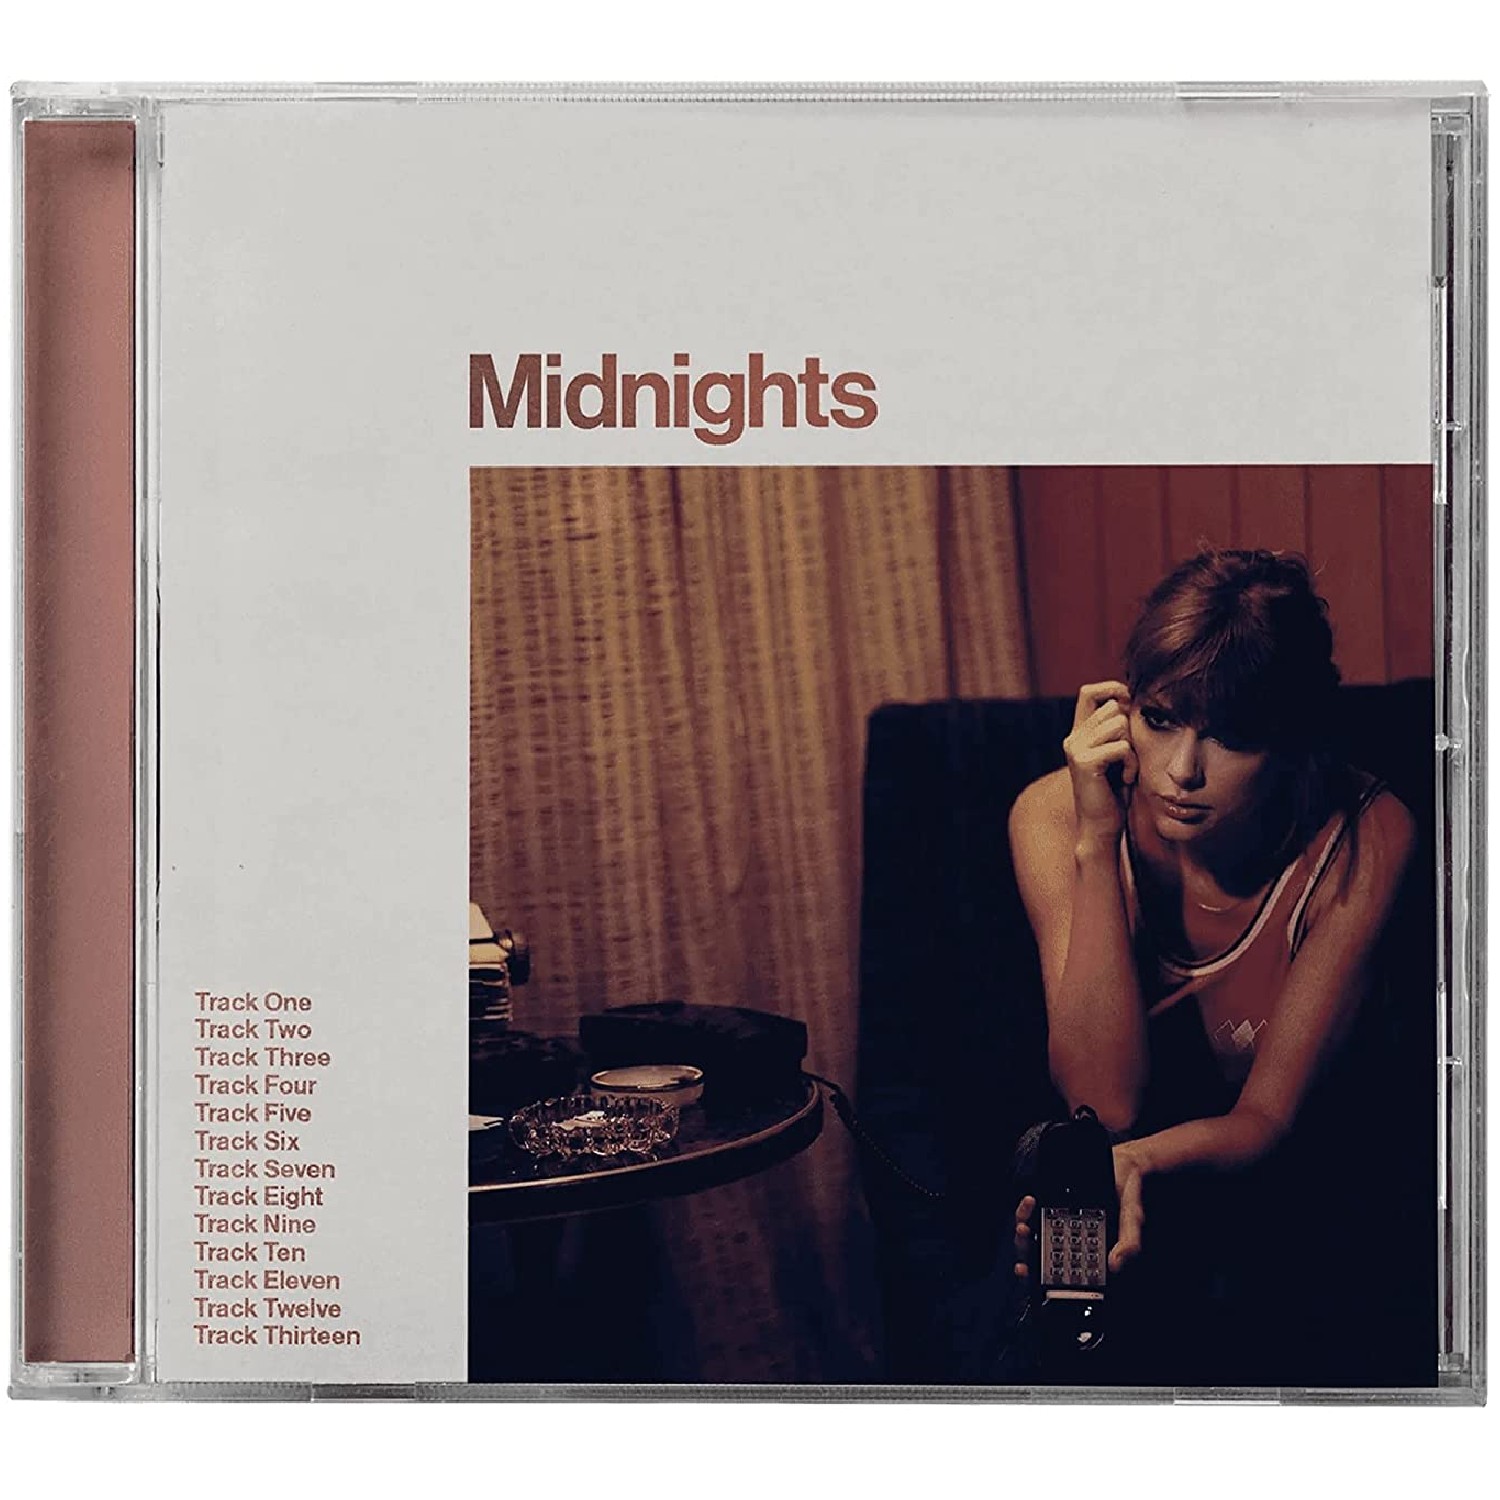 Taylor Swift - Midnights (Blood Moon edition CD)